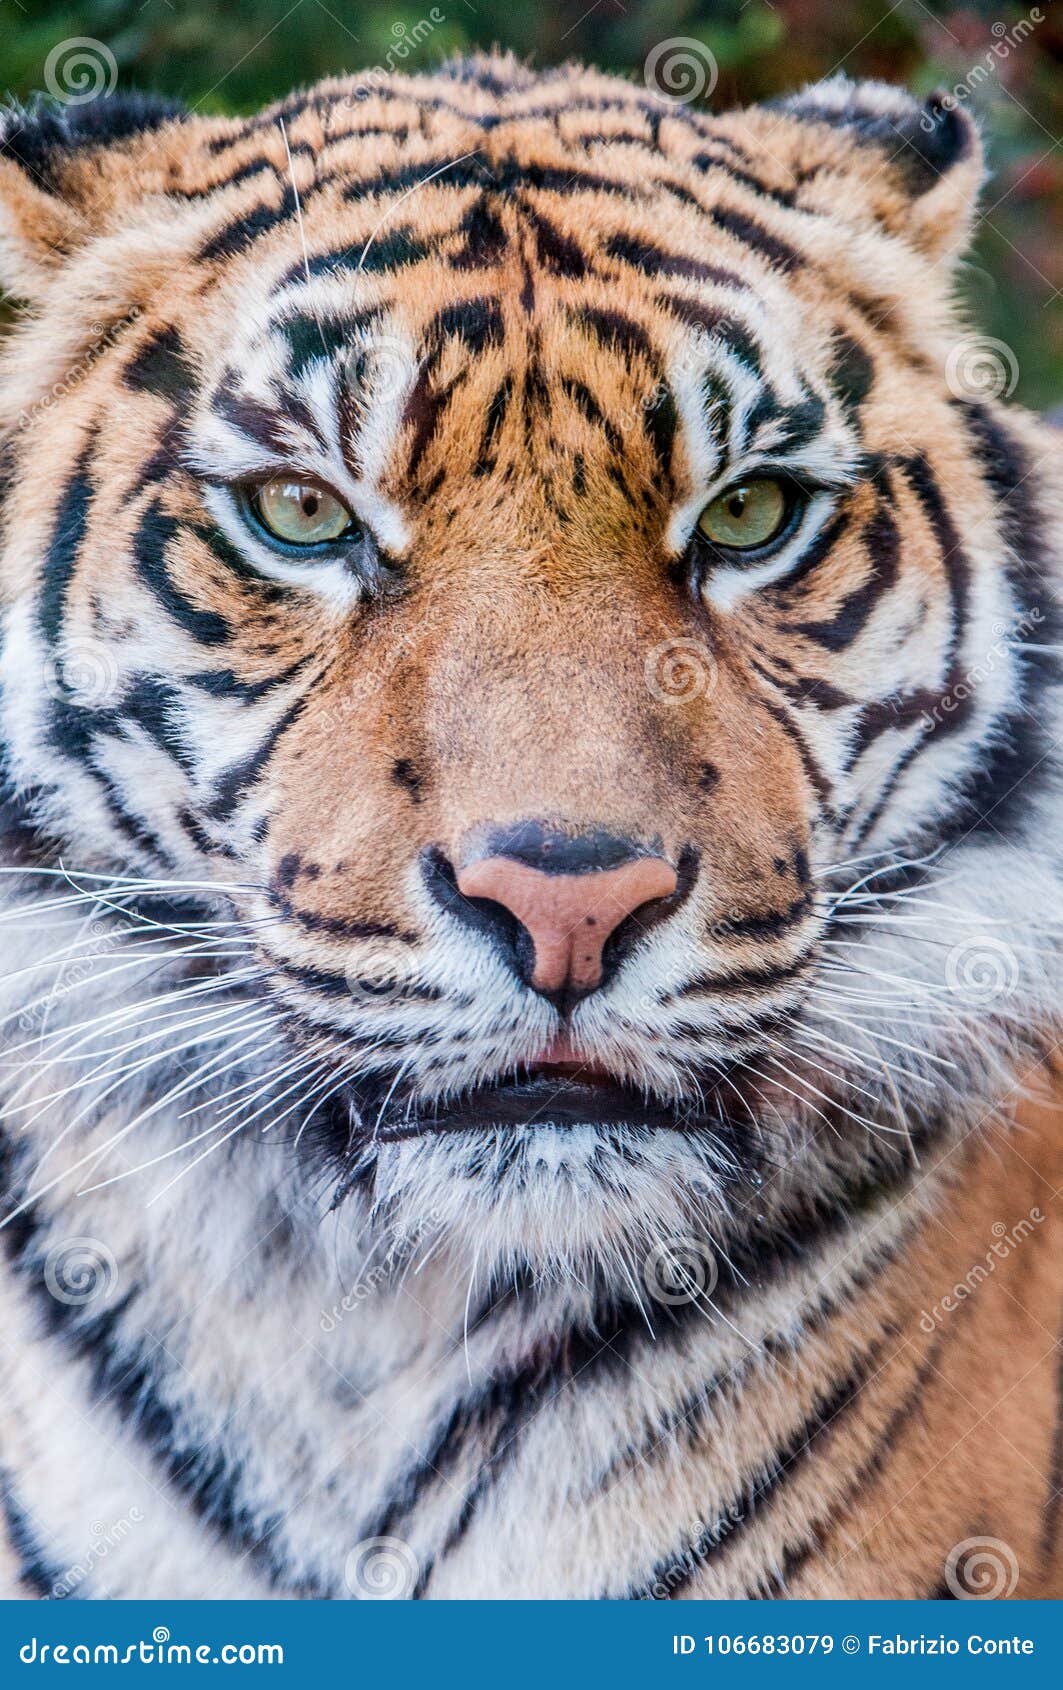 Bengal Tiger Queen Of Forest Tiger Mask Tiger Close Up Feline Stock Image Image Of Background Skin